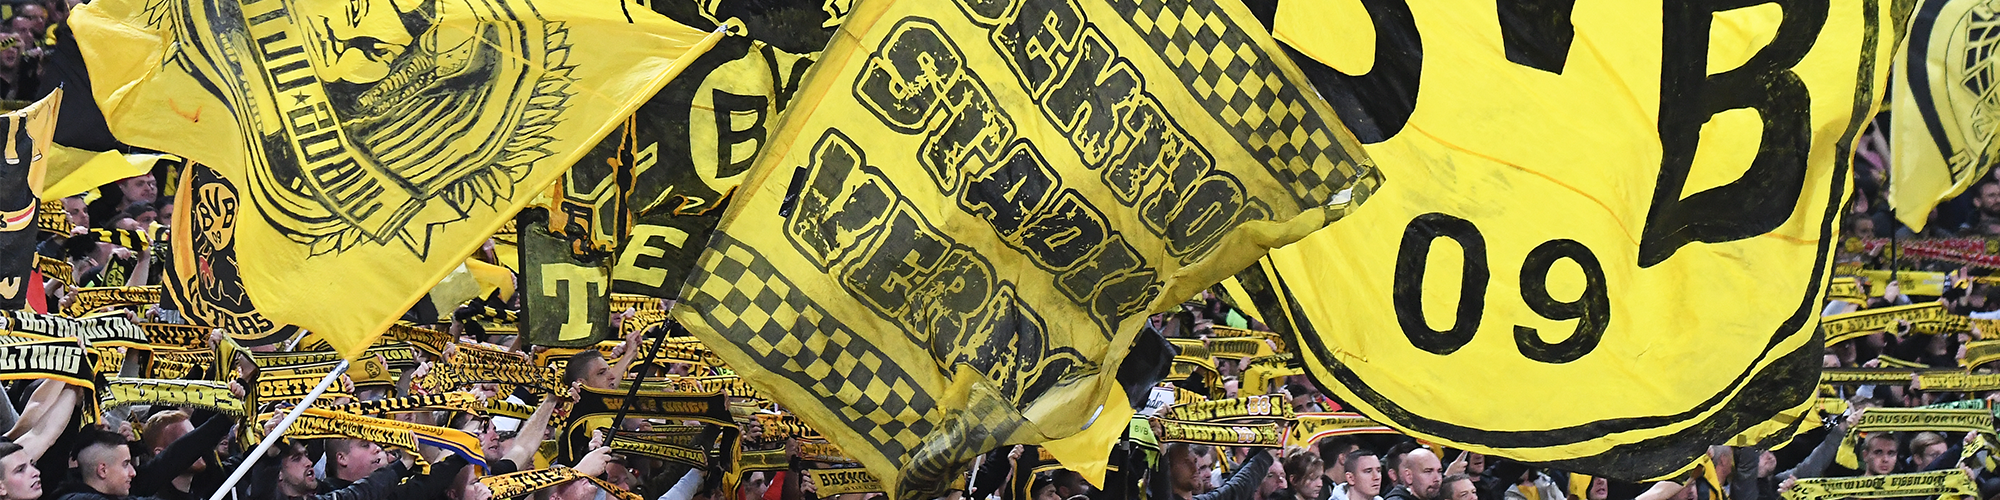 Borussia Dortmund Tickets & Experiences